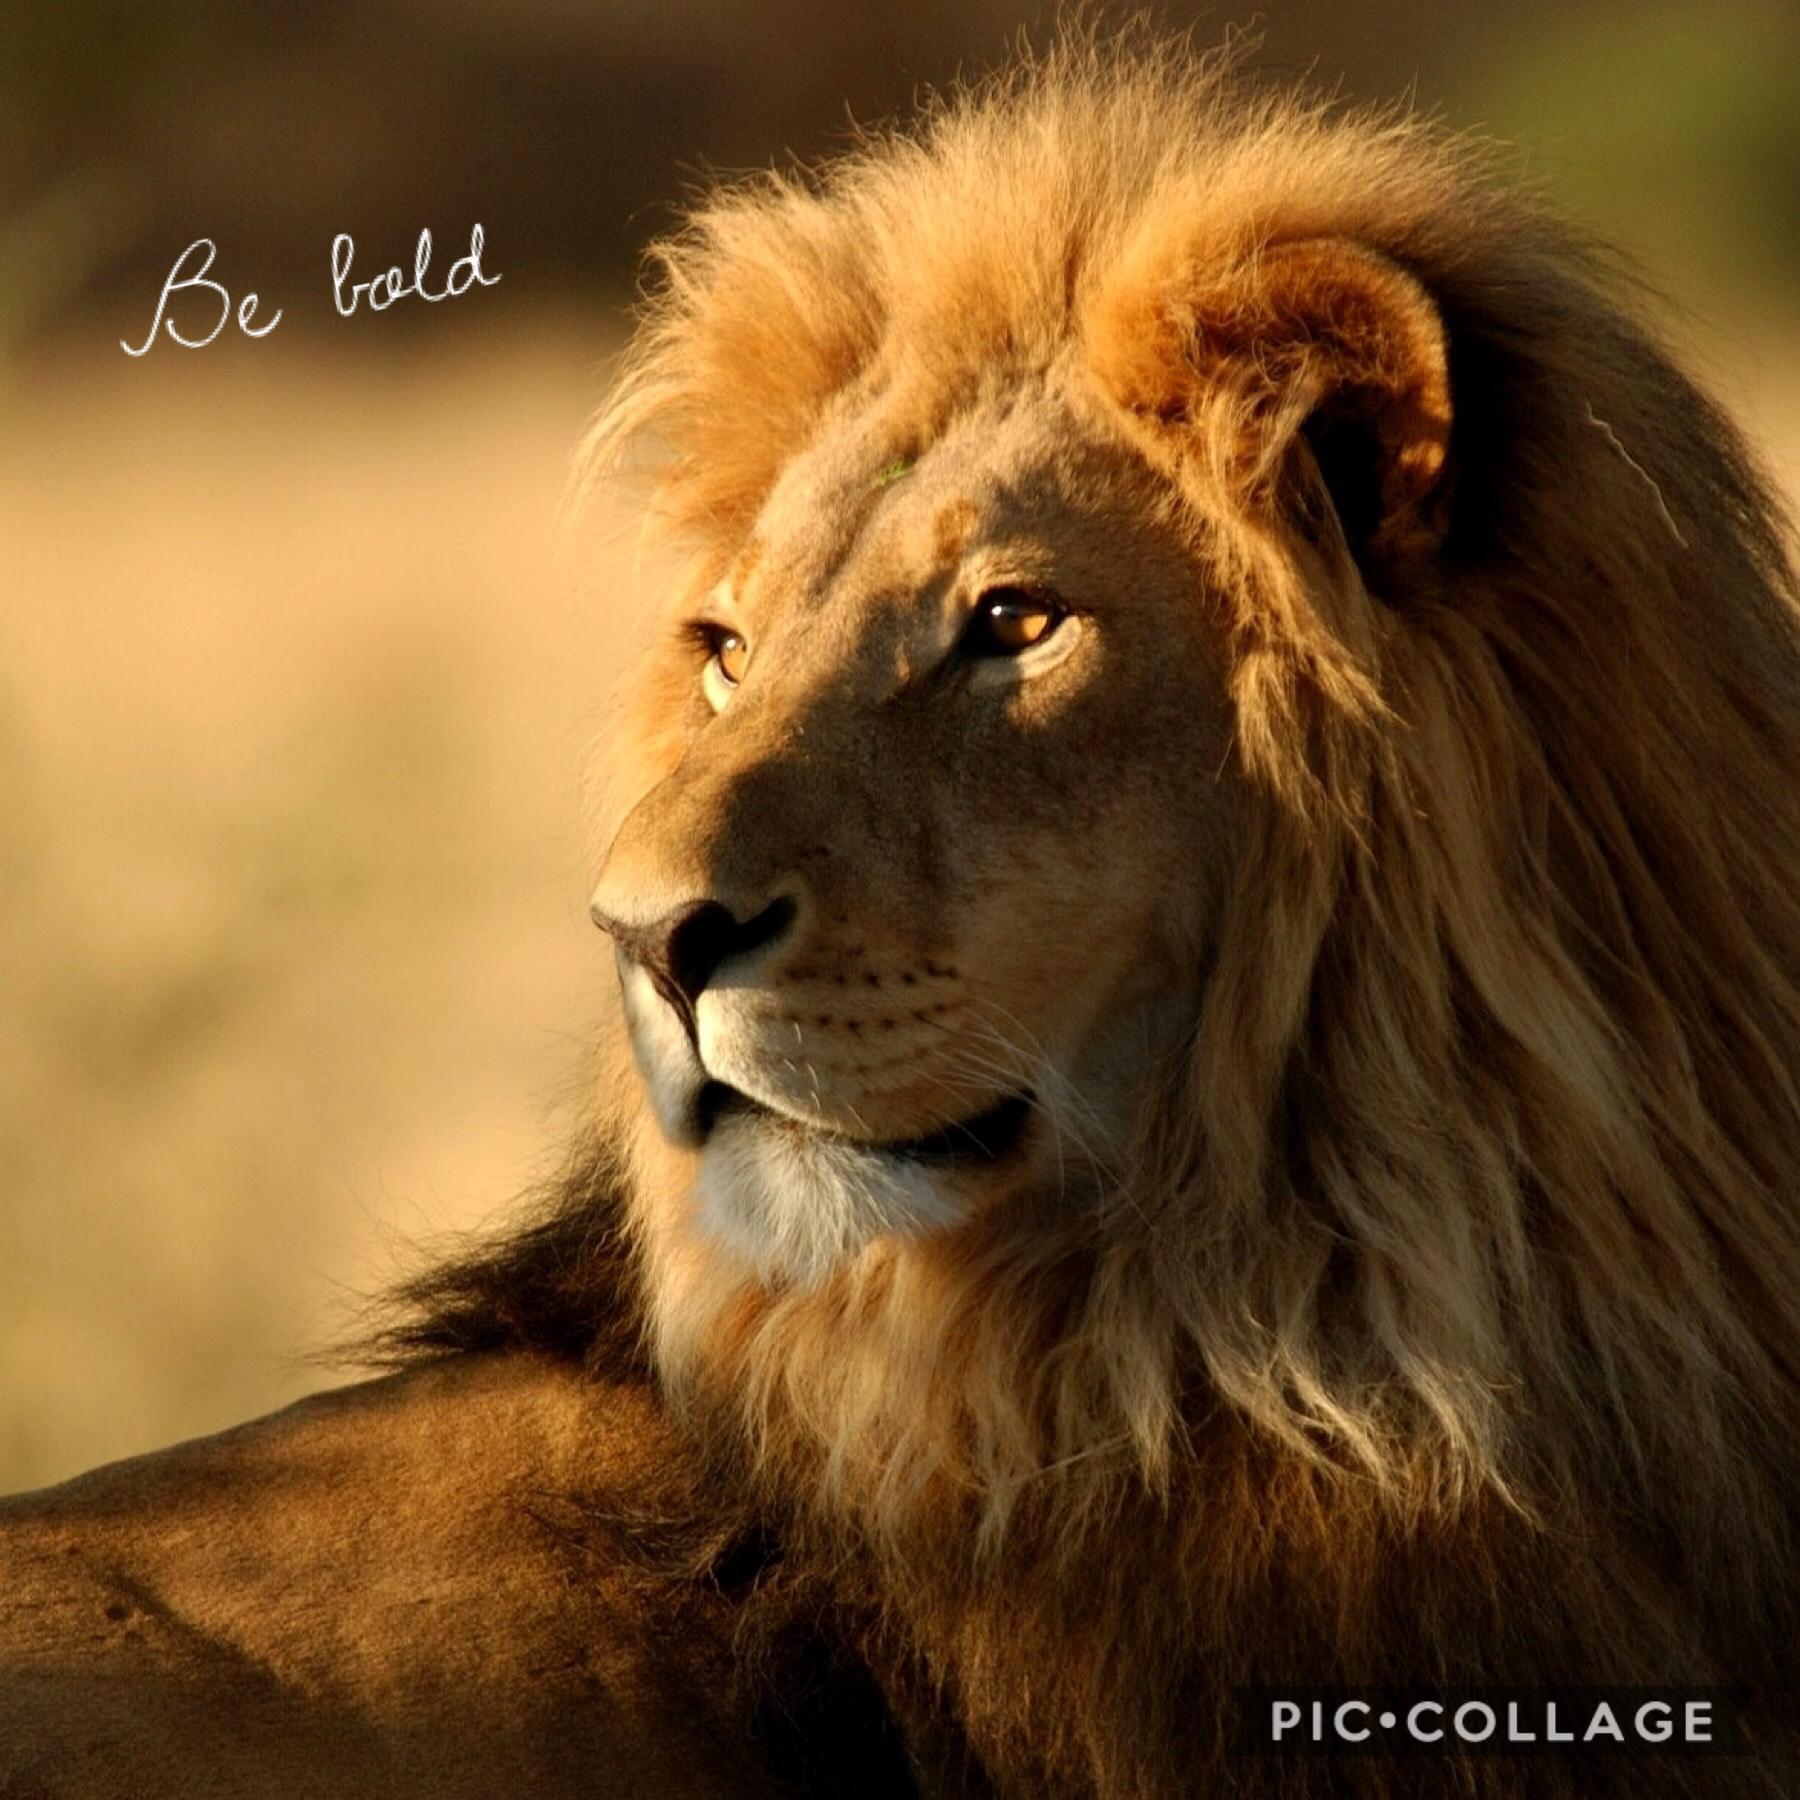 Be like the lion